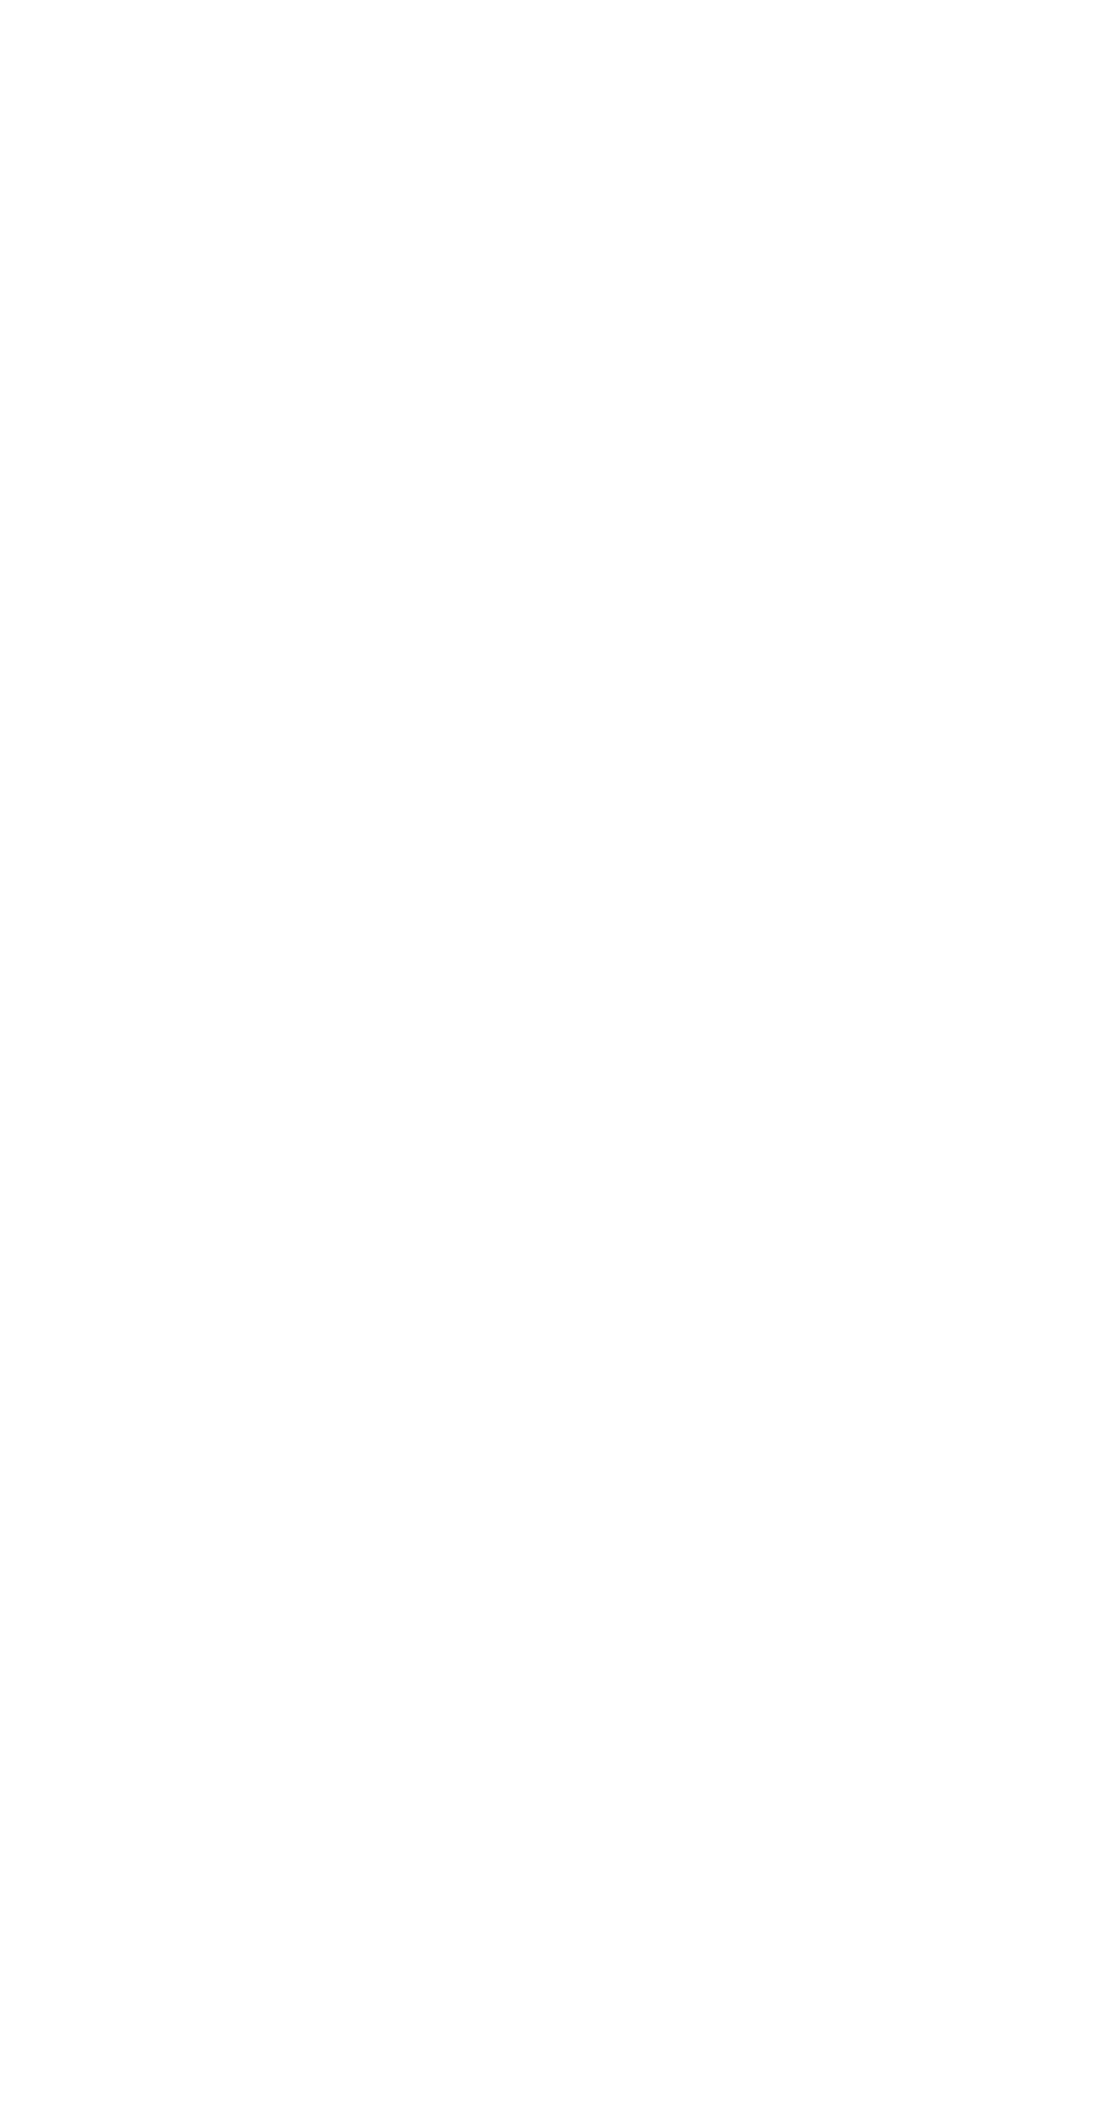 Ice Cream Detroit